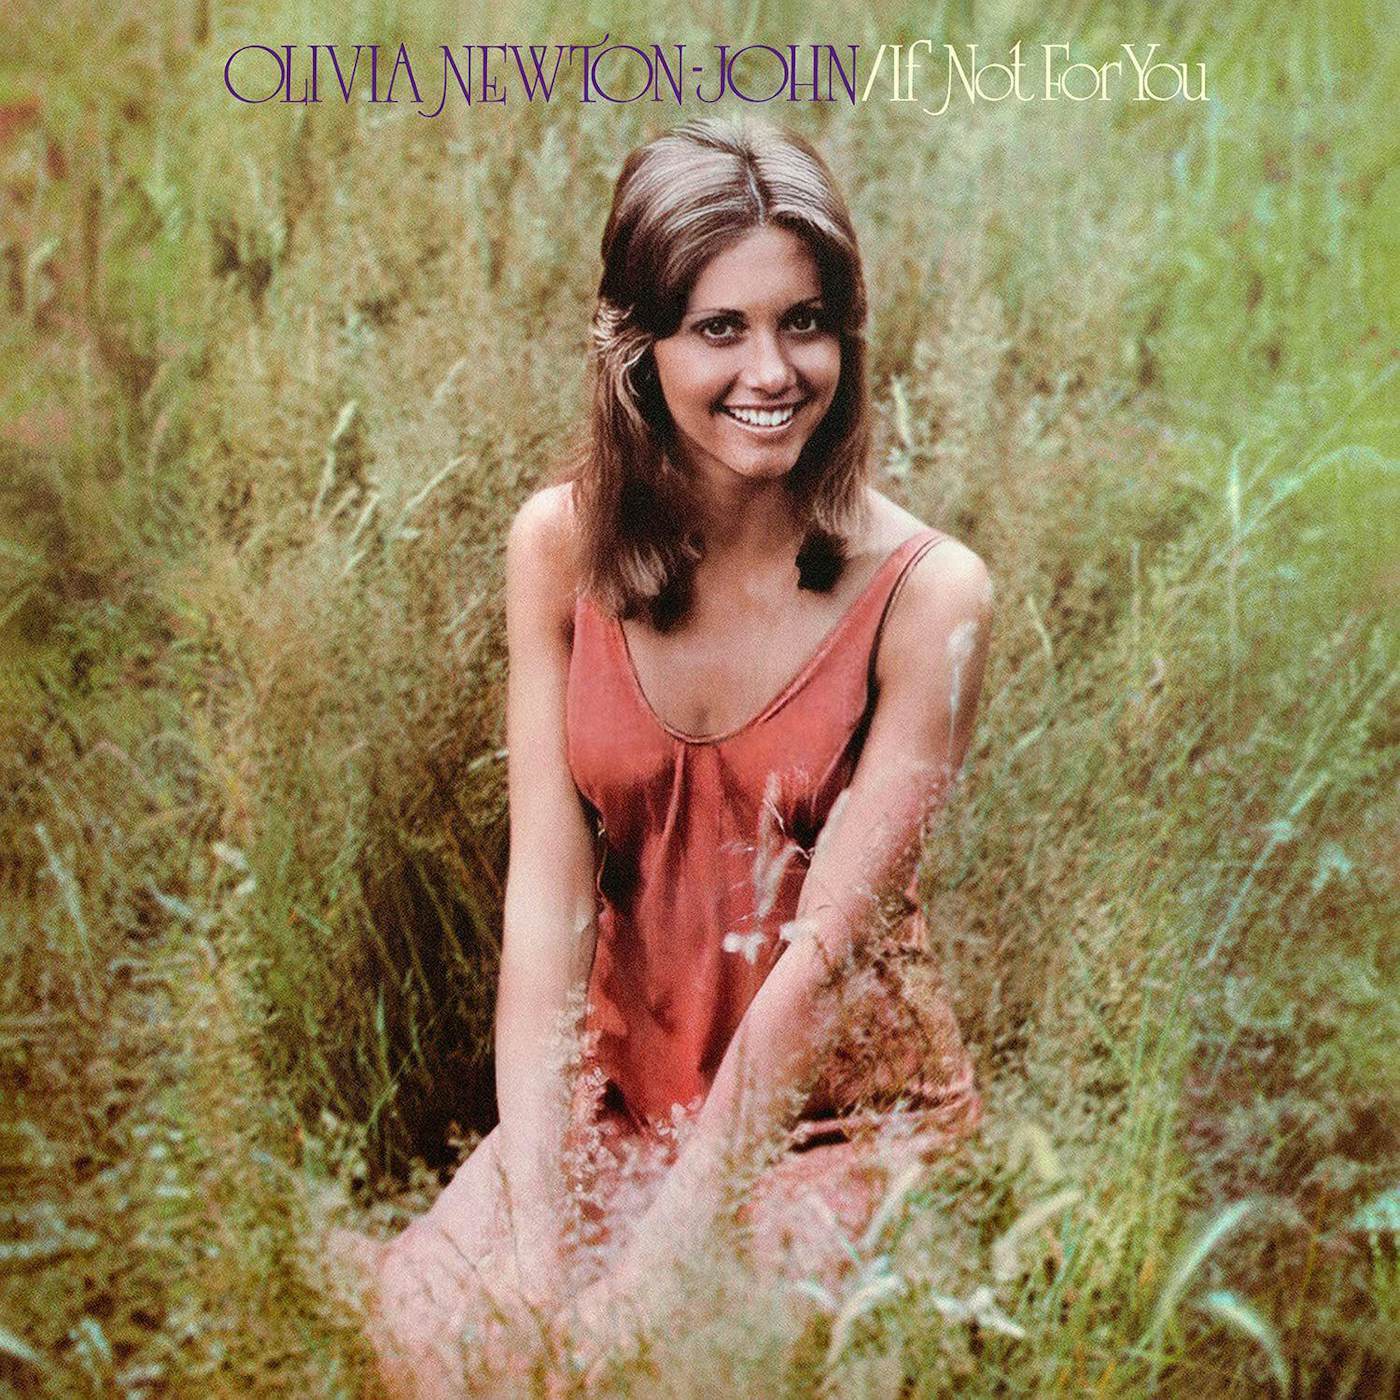 Olivia Newton-John If Not For You Vinyl Record